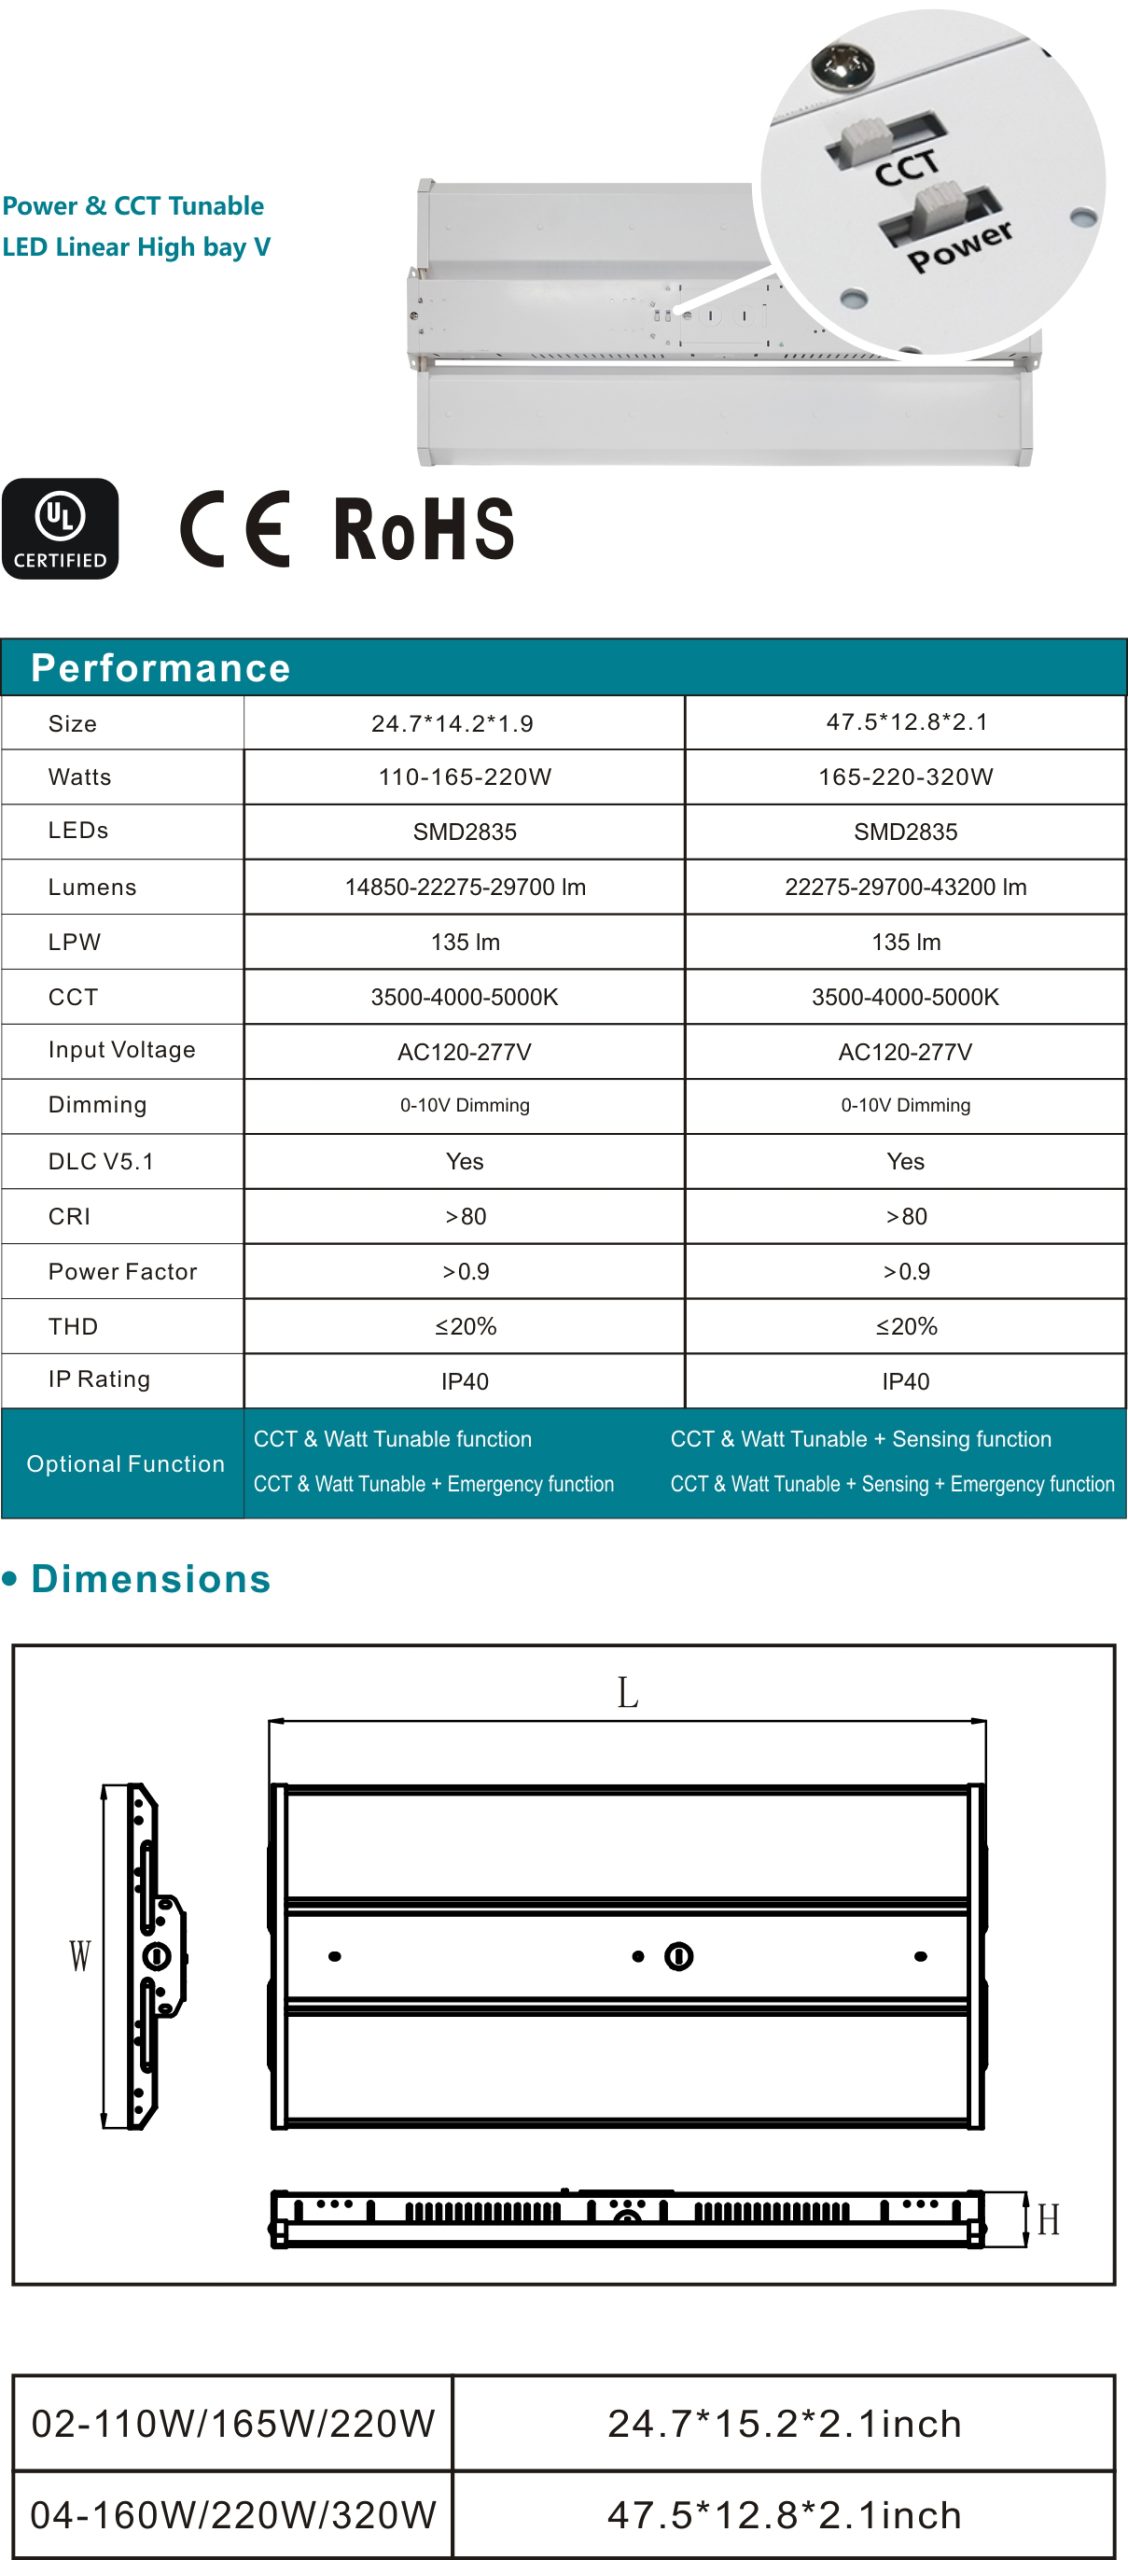 Power & CCT Tunable LED Linear High bay V